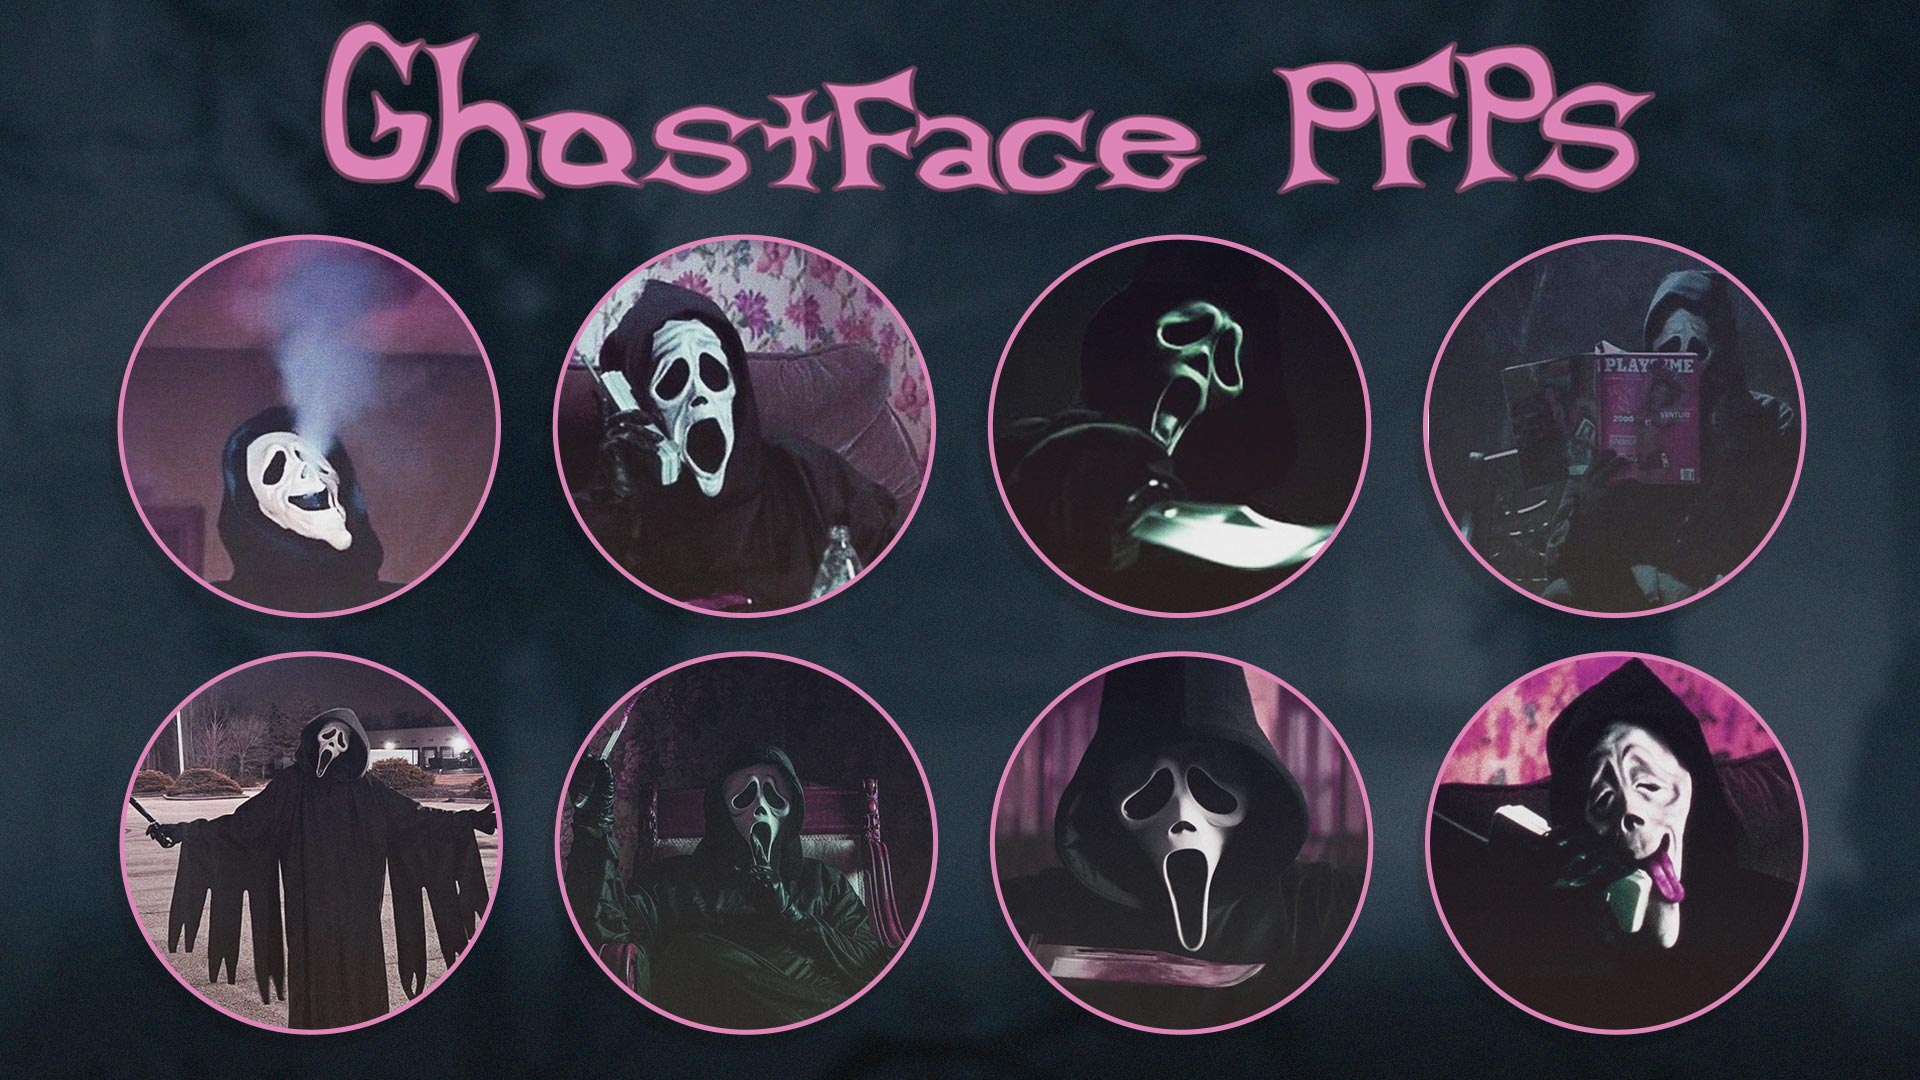 ghostface pfps